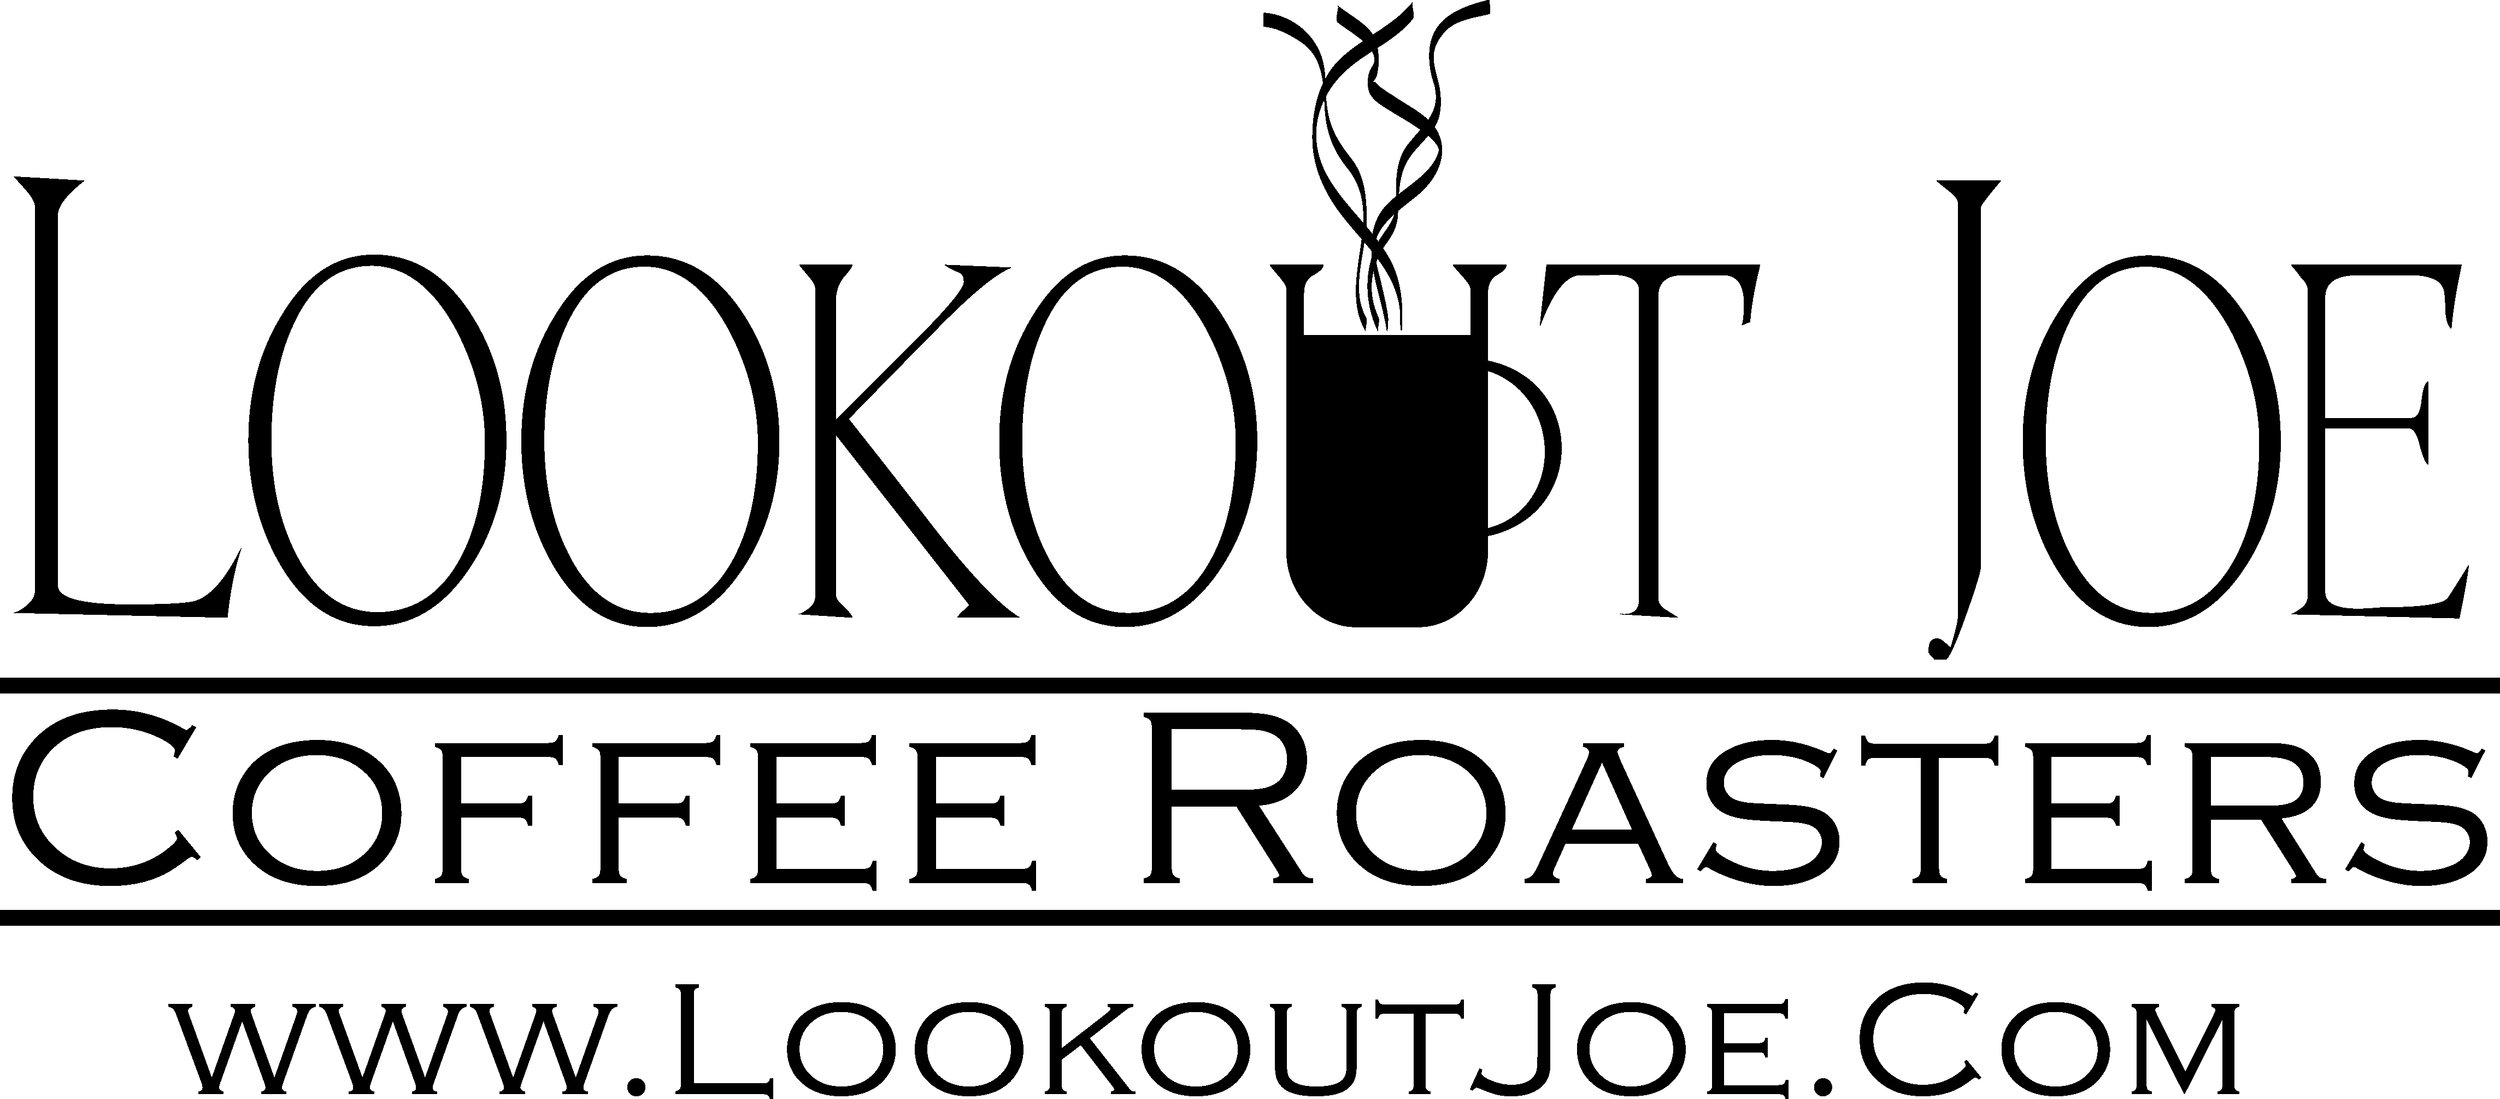 Lookout Joe logo- Revised - No Tag Line.jpg